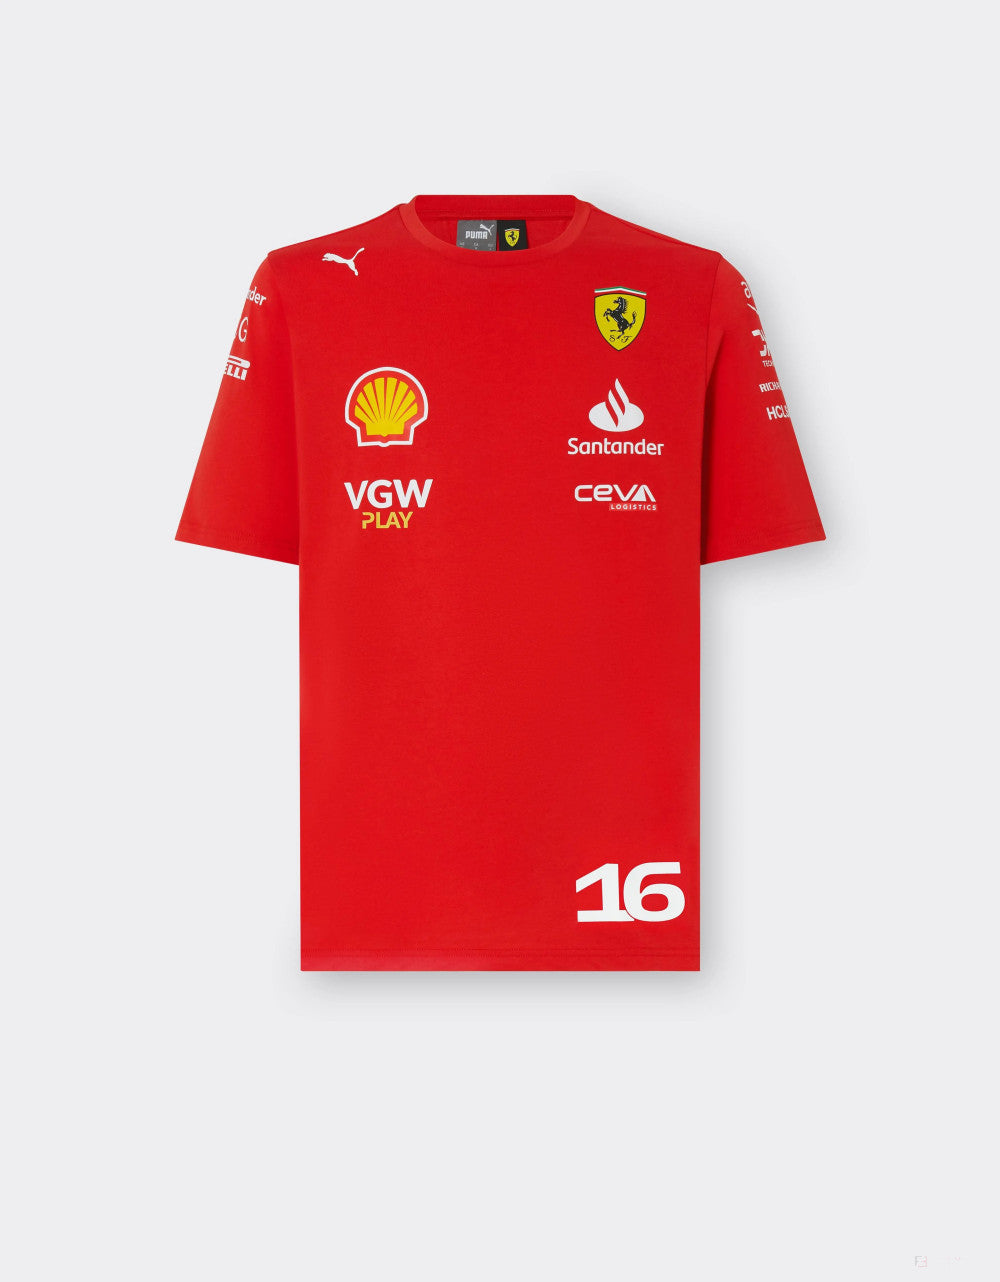 Ferrari t-shirt, Puma, Charles Leclerc, red